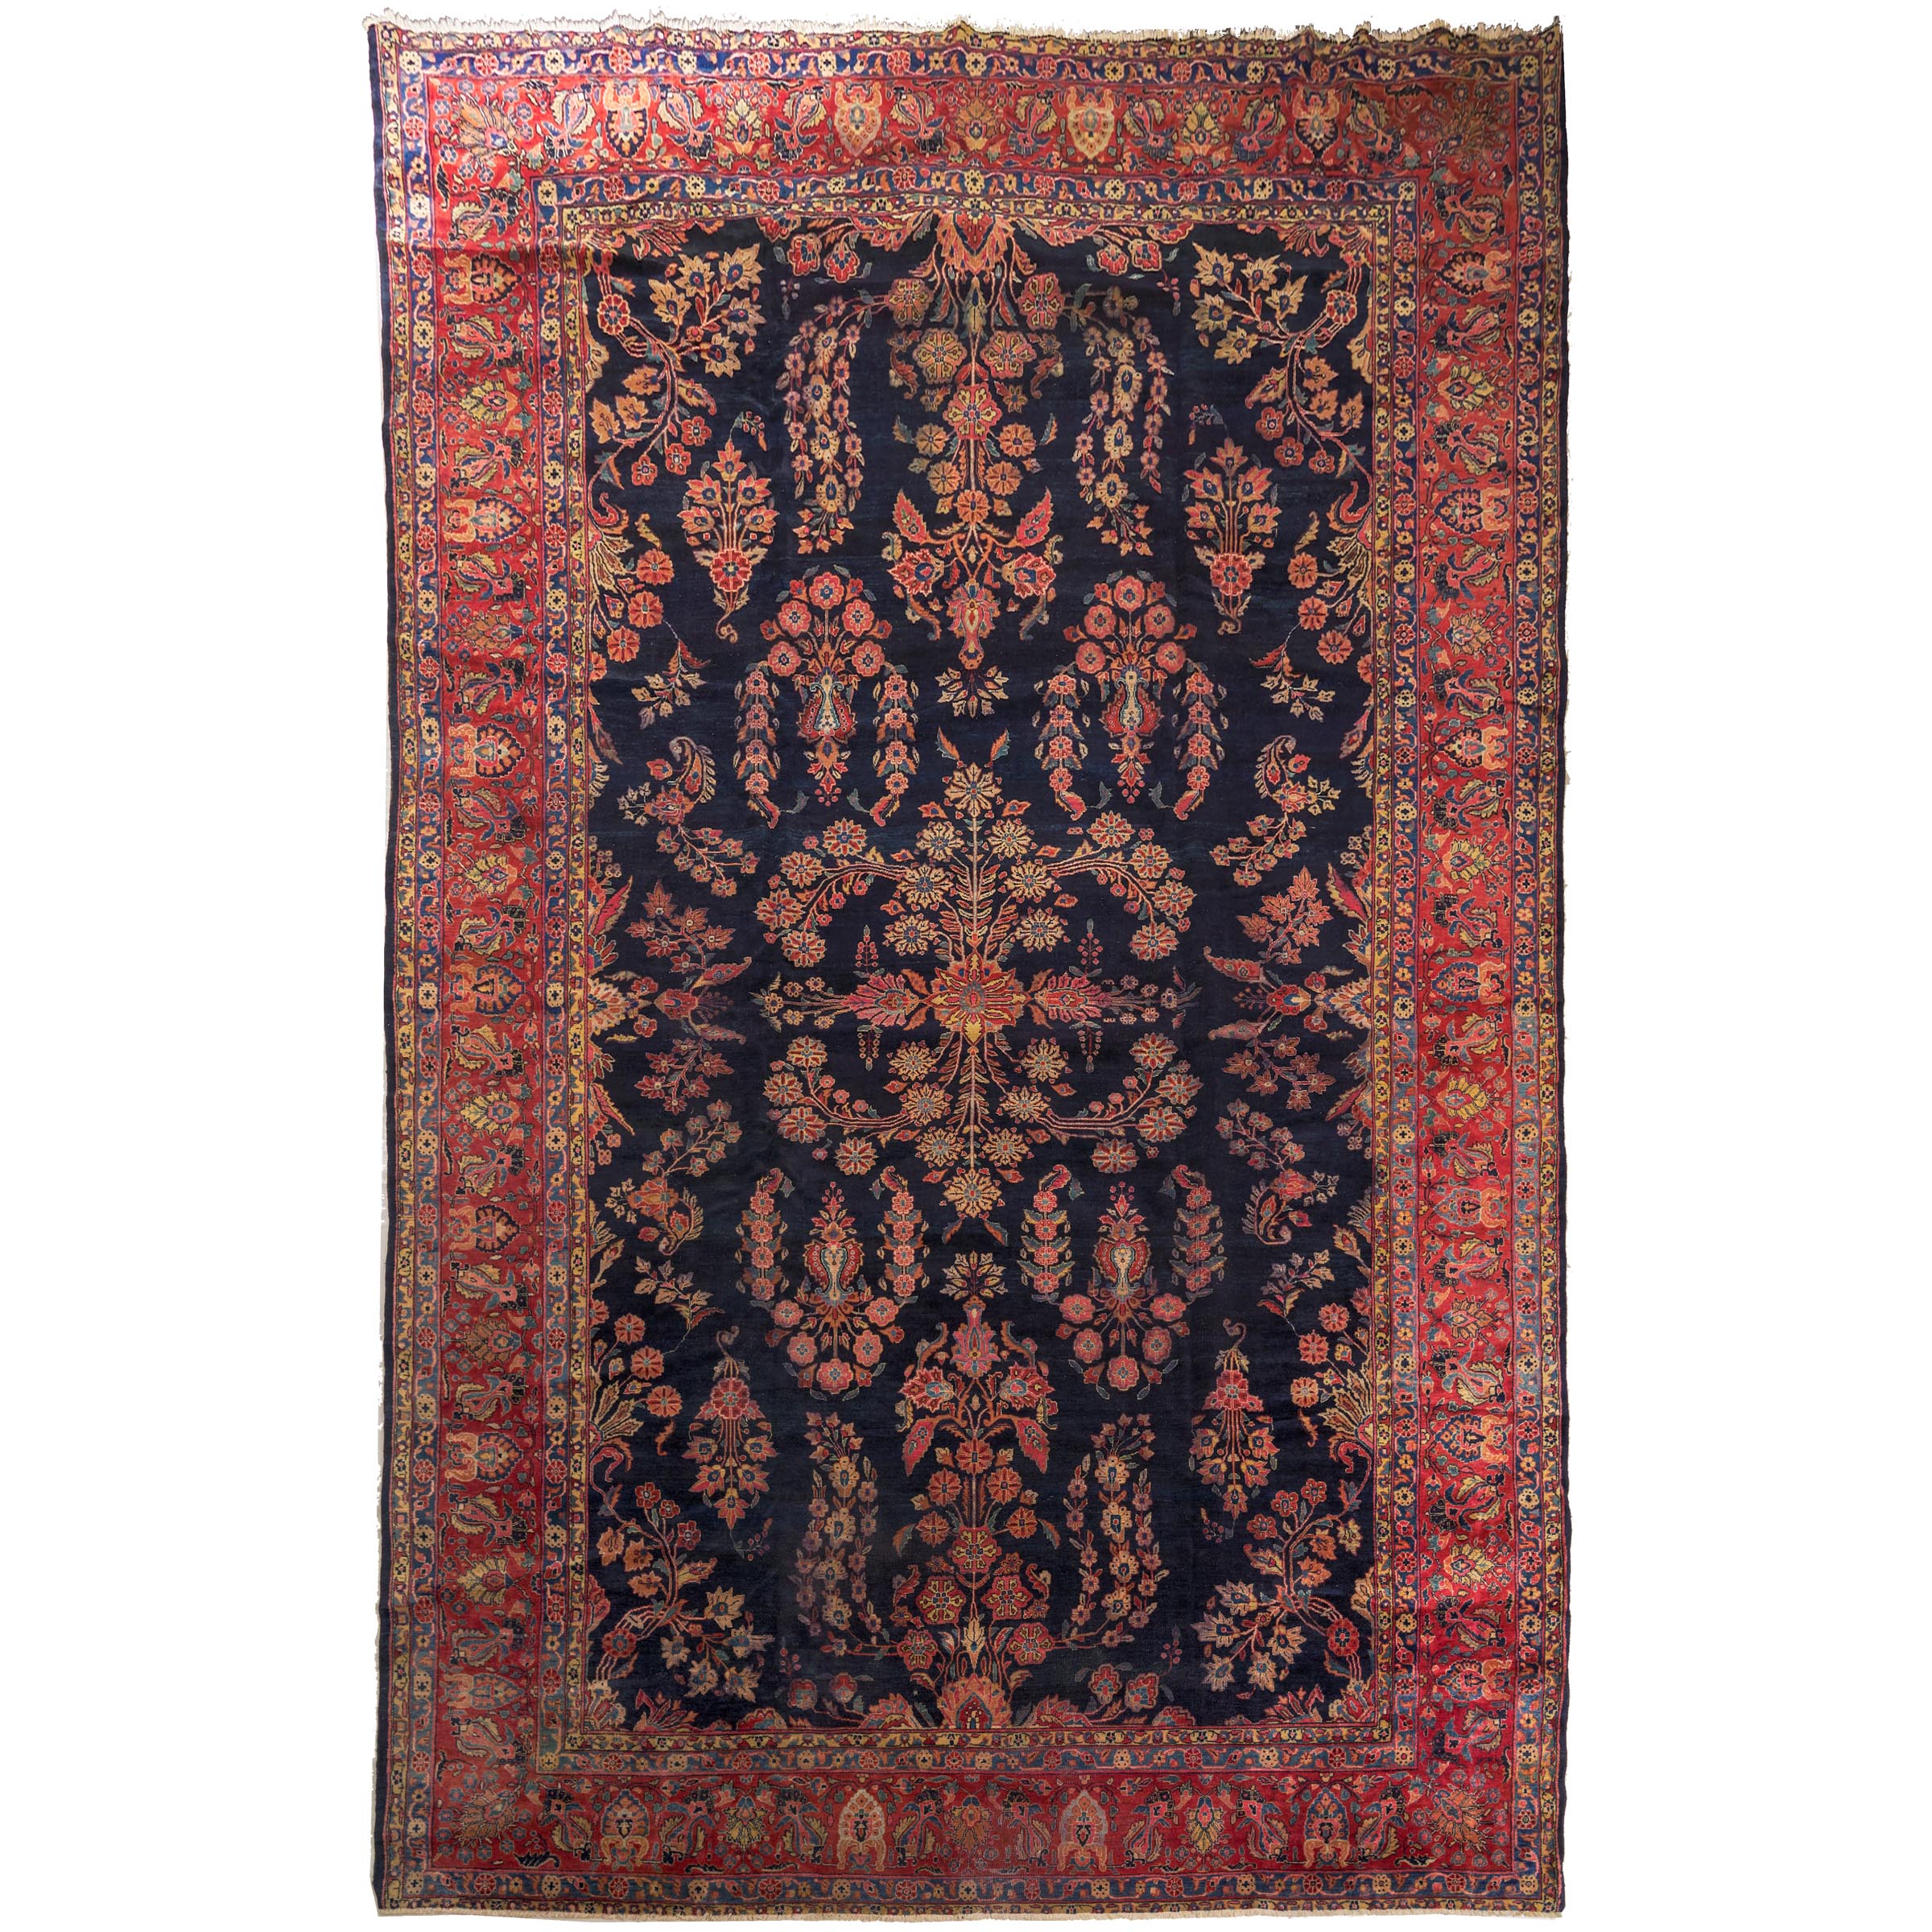 Mohajeran Sarouk Carpet, Persian, c.1900